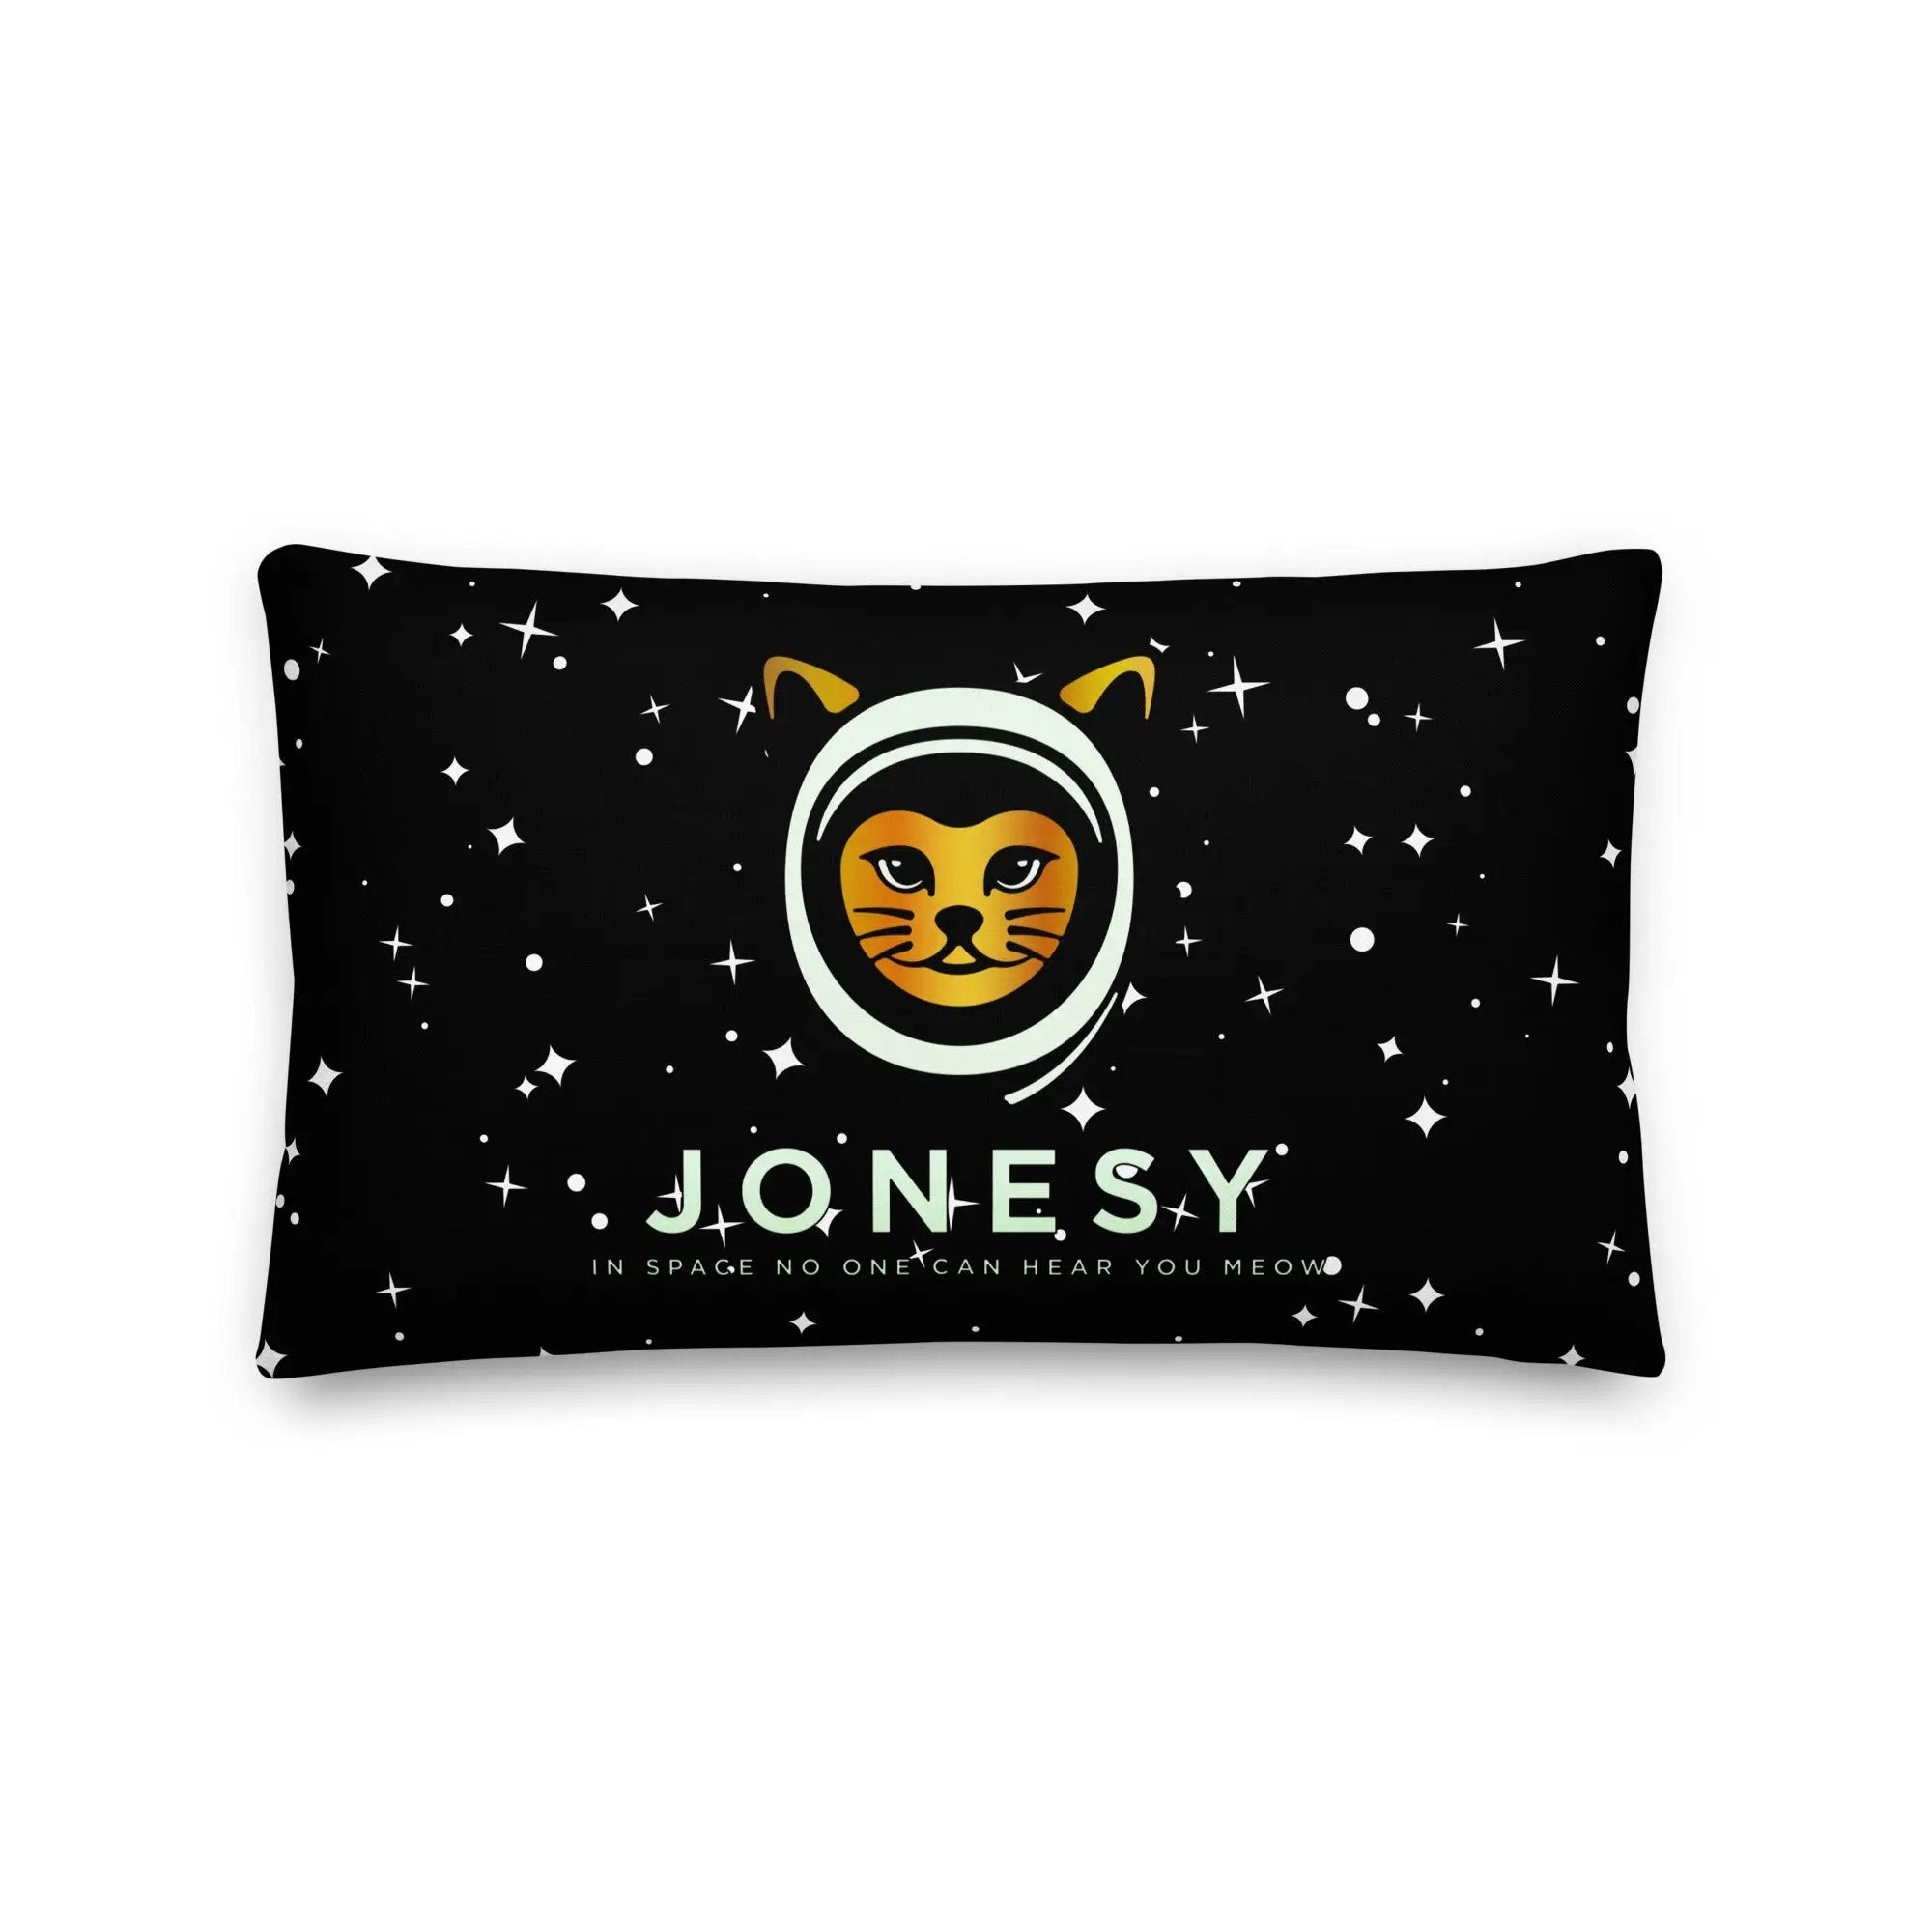 Jonesy Premium Pillow